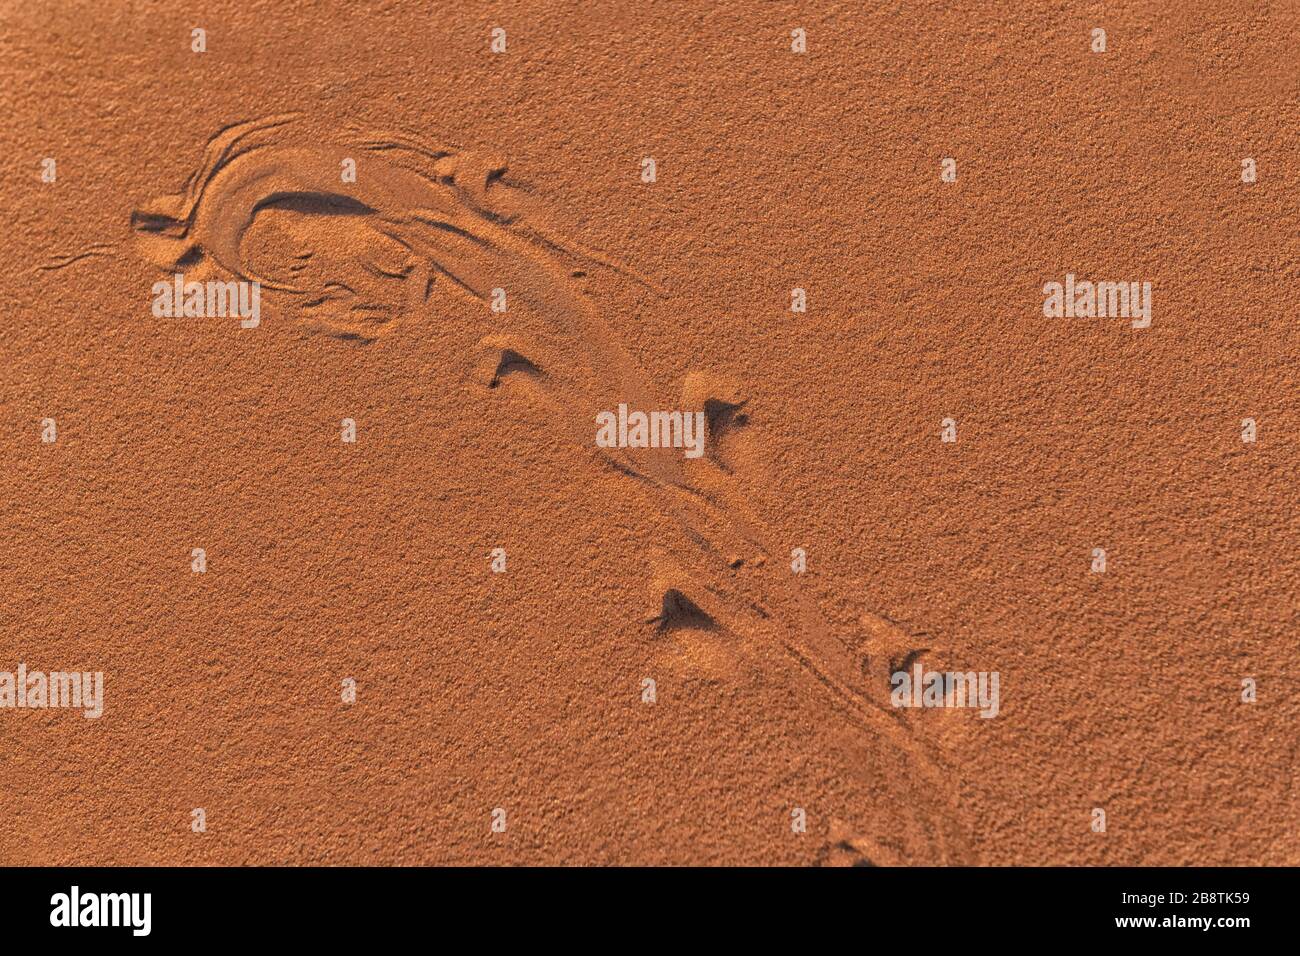 Footprints, tracks of a desert sandfish (scincus, common skink) at the Erg Chebbi sand dunes in Merzouga, Morocco Stock Photo